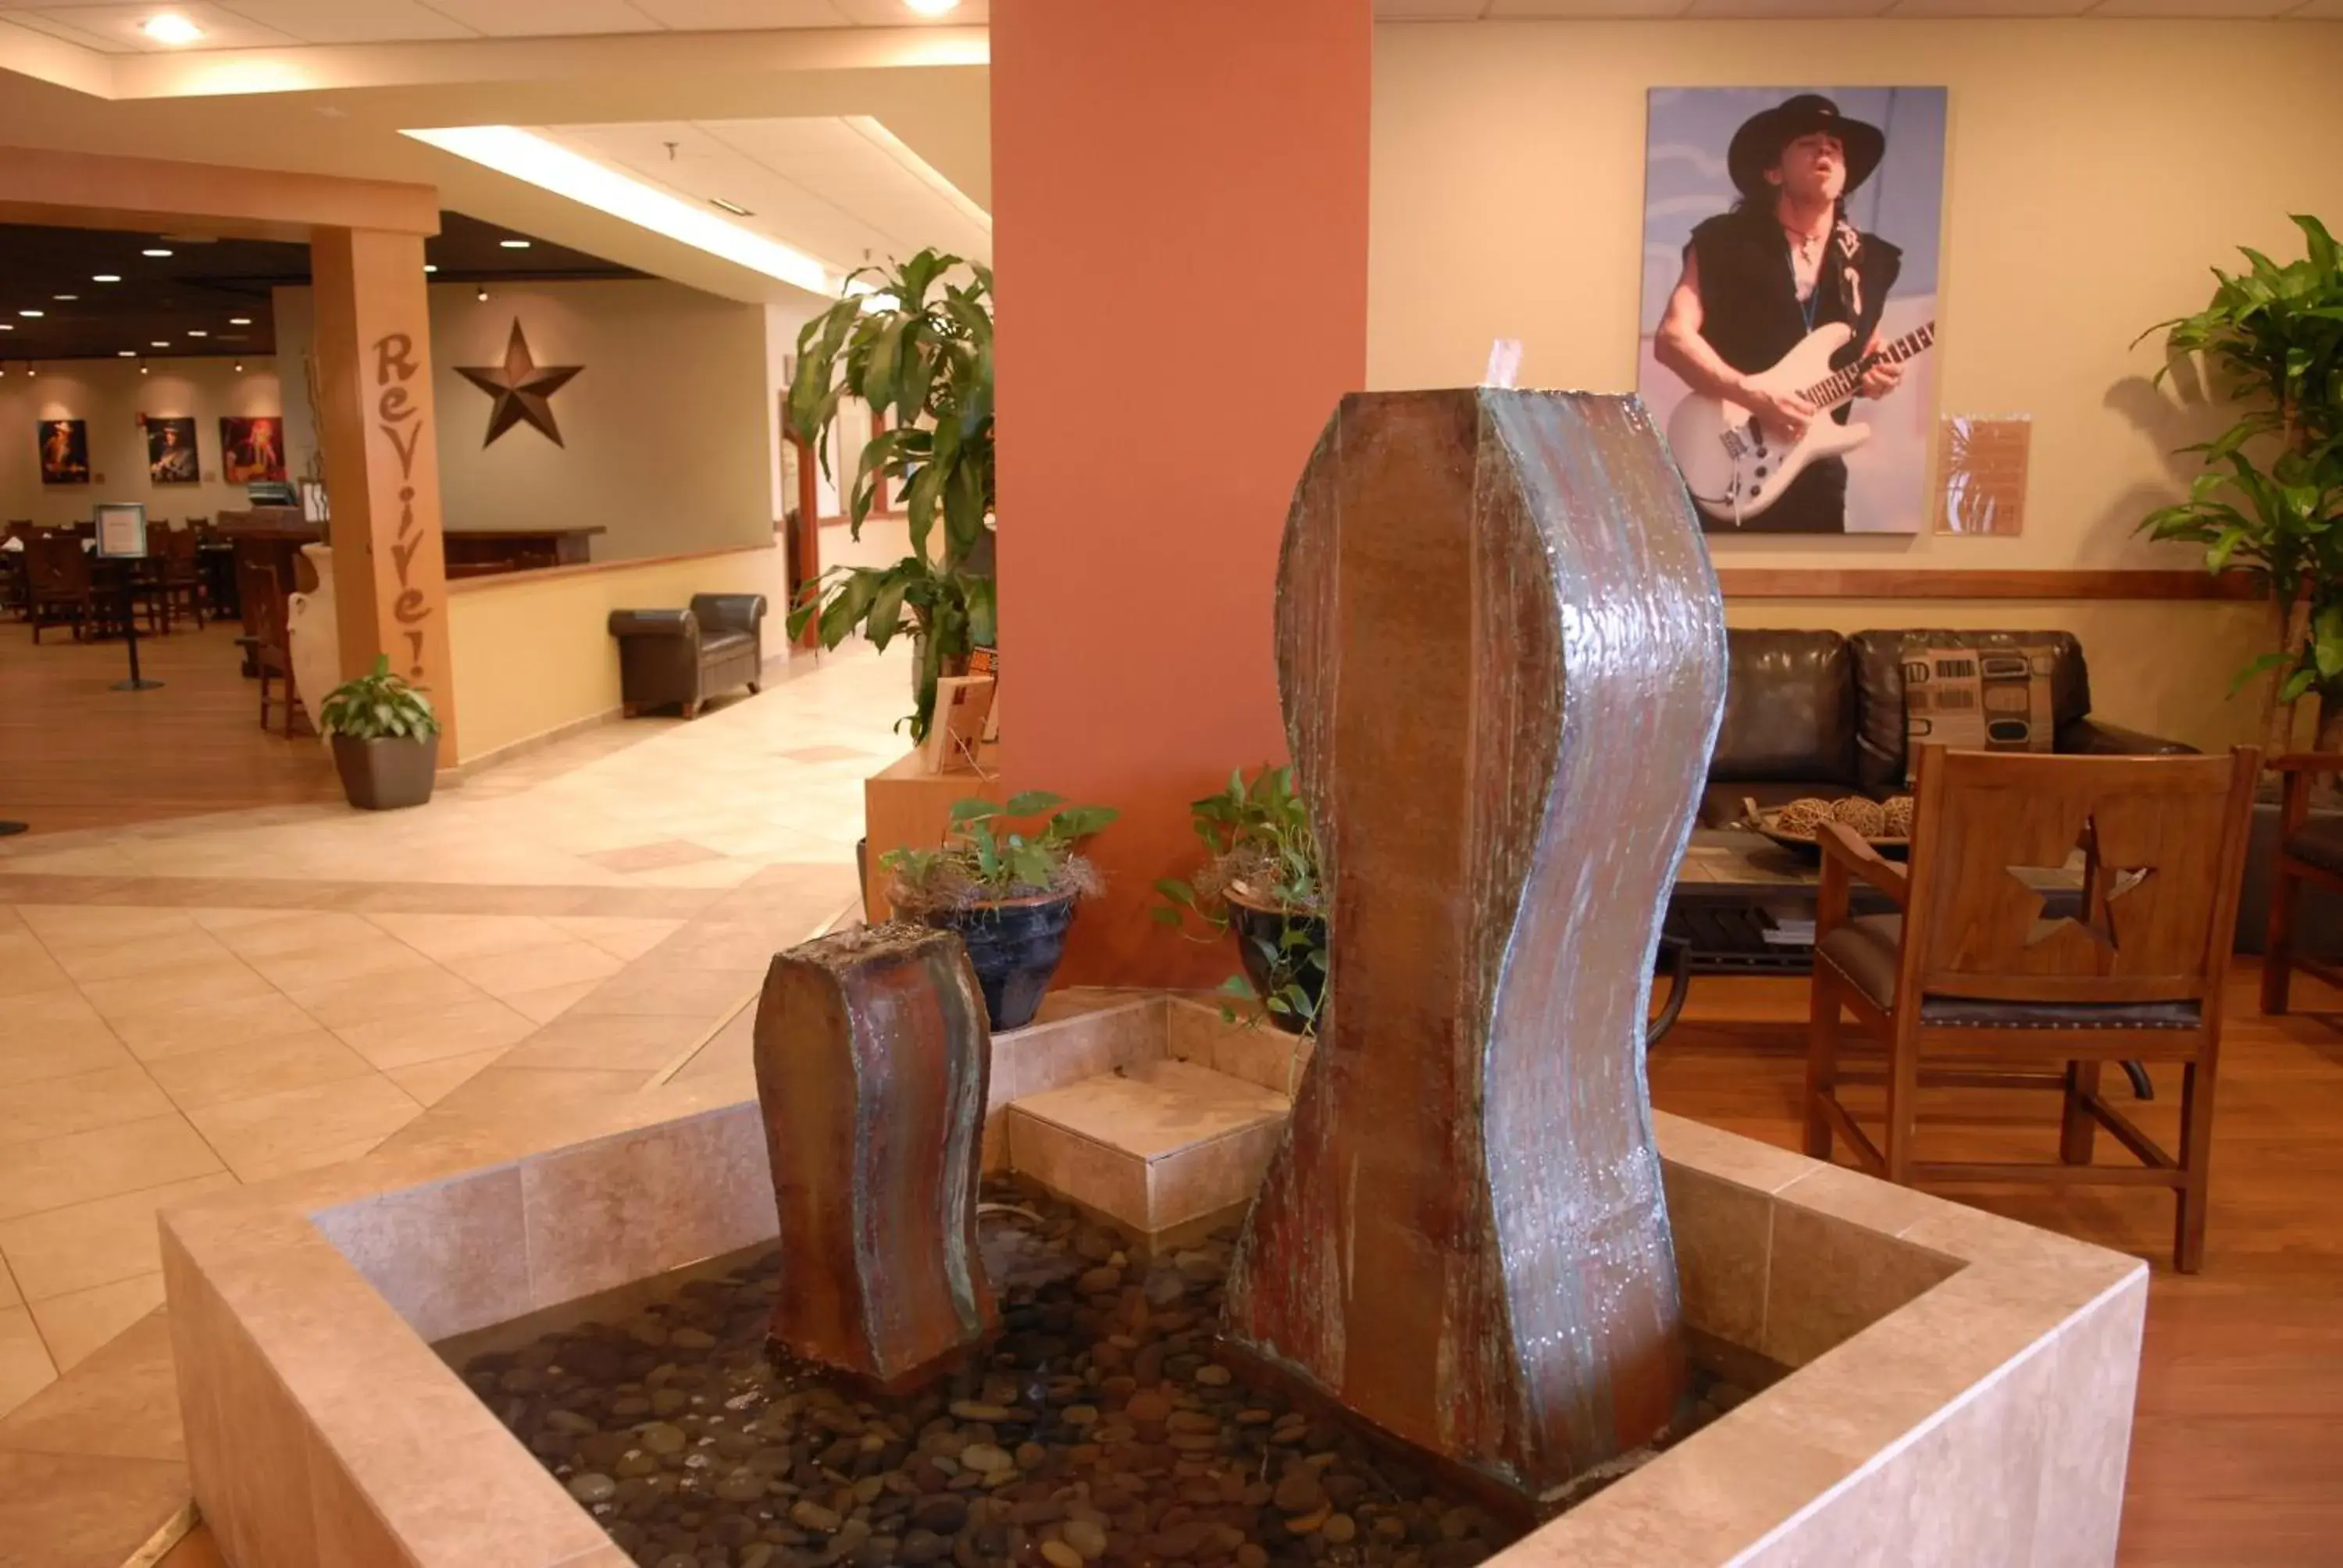 Lobby or reception in Wyndham Garden Hotel Austin